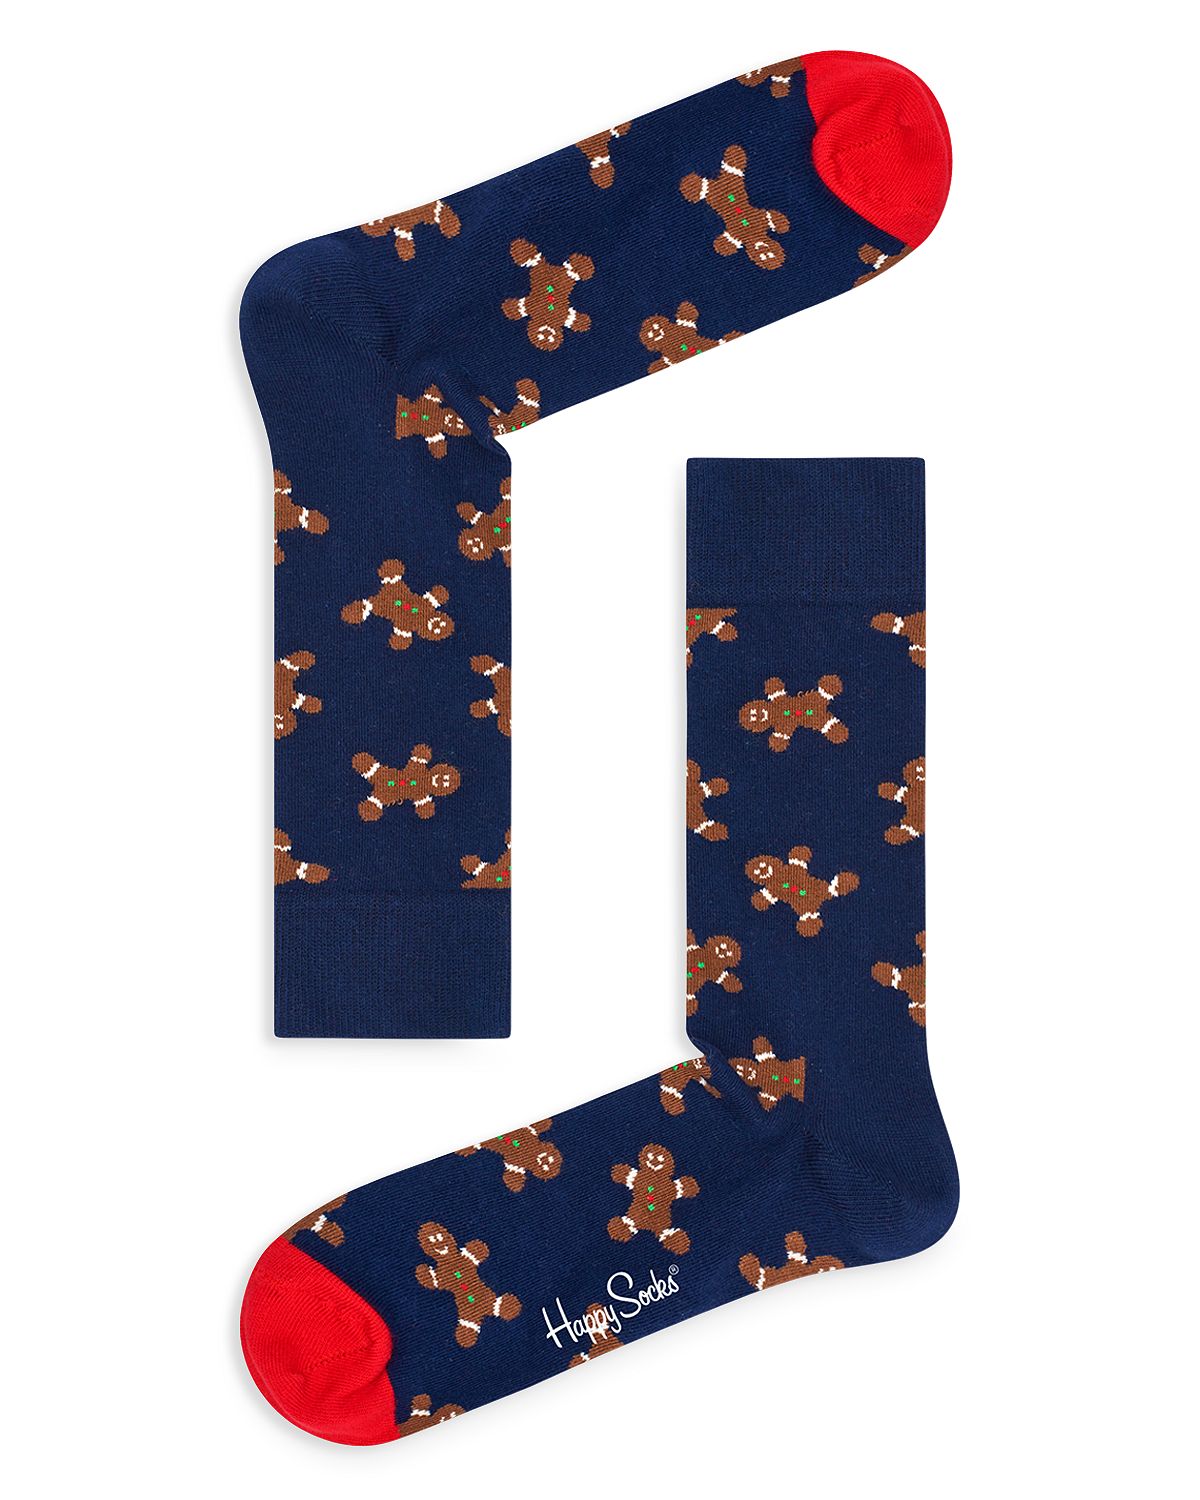 Happy Socks Gingerbread Men Socks Navy